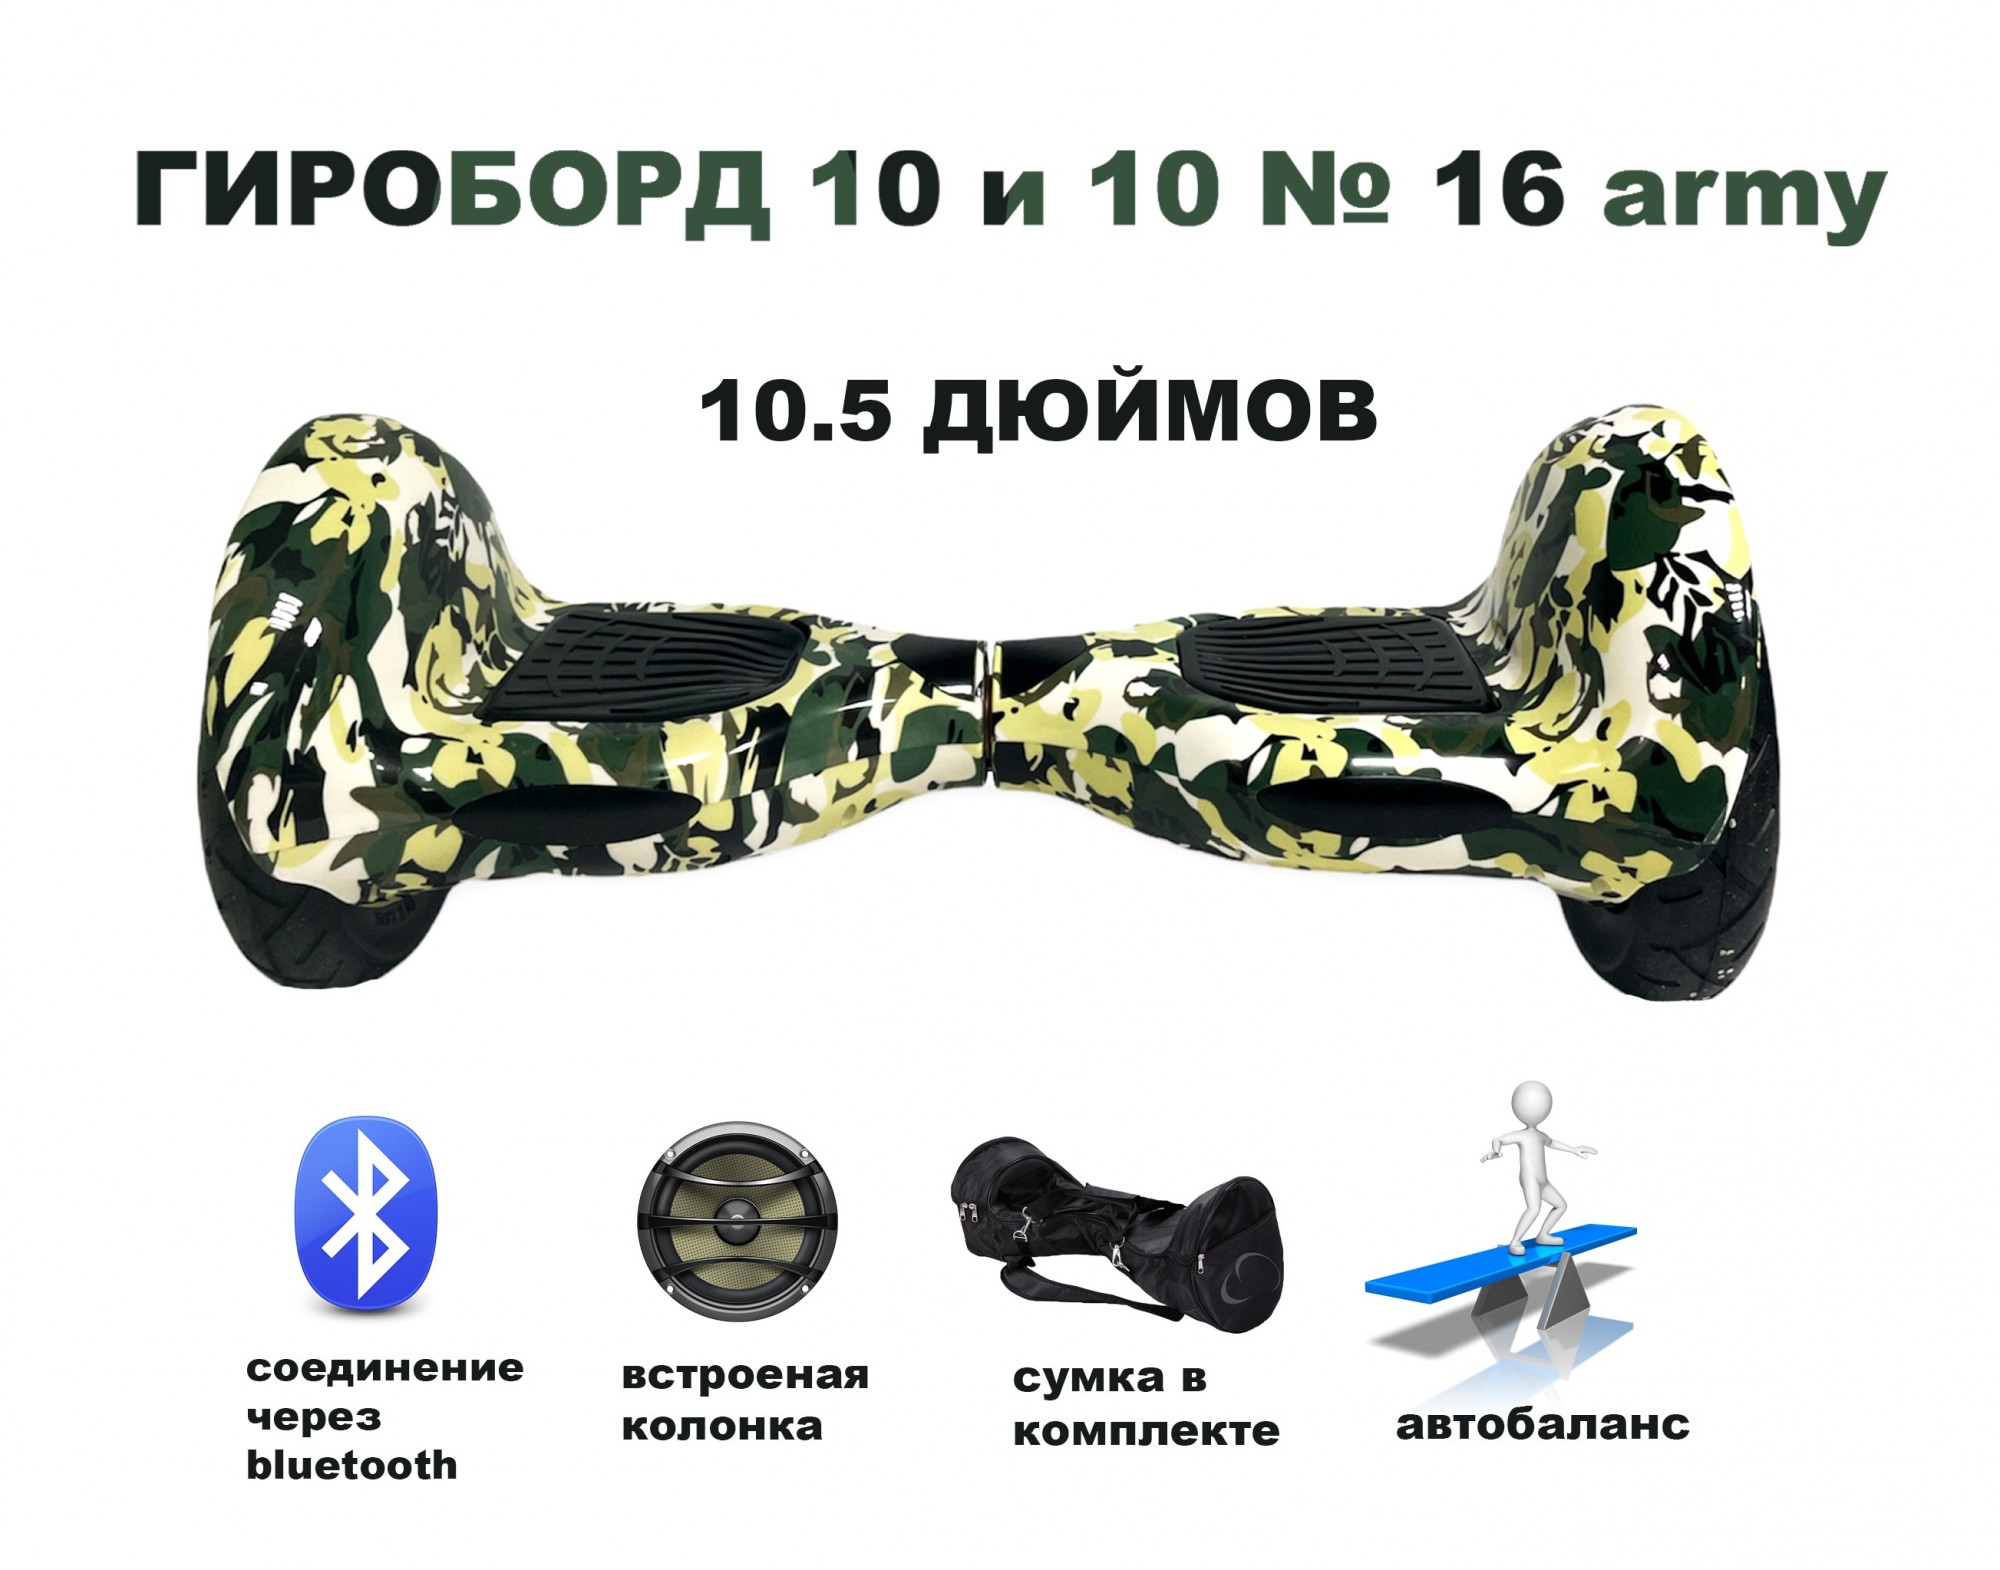 

ГИРОСКУТЕР 10 in 1 № 16 ARMY Military.Встроенный BLUETOOTH.